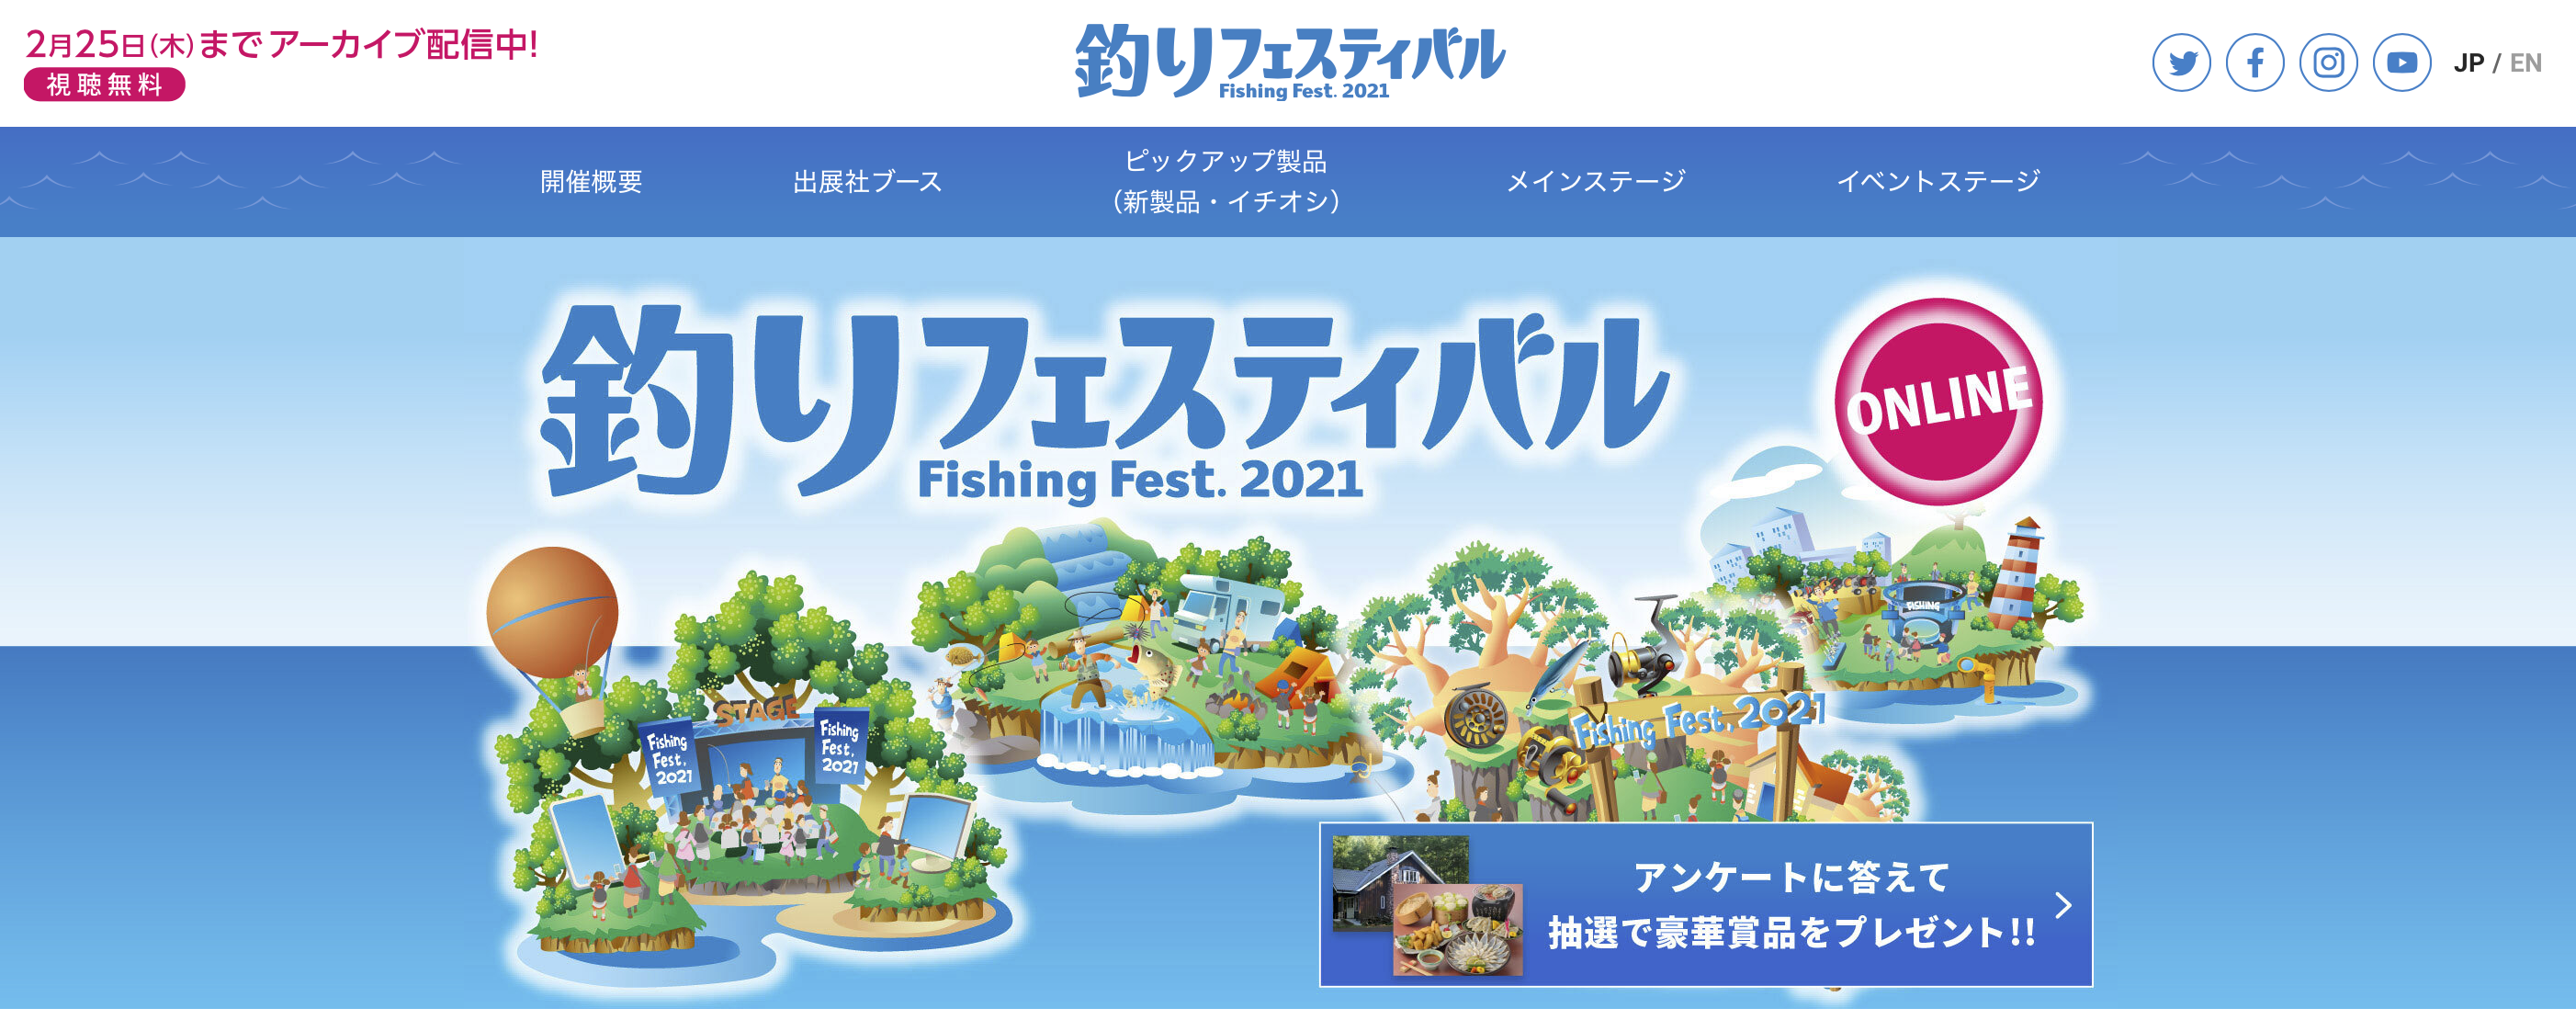 fishingfes2021